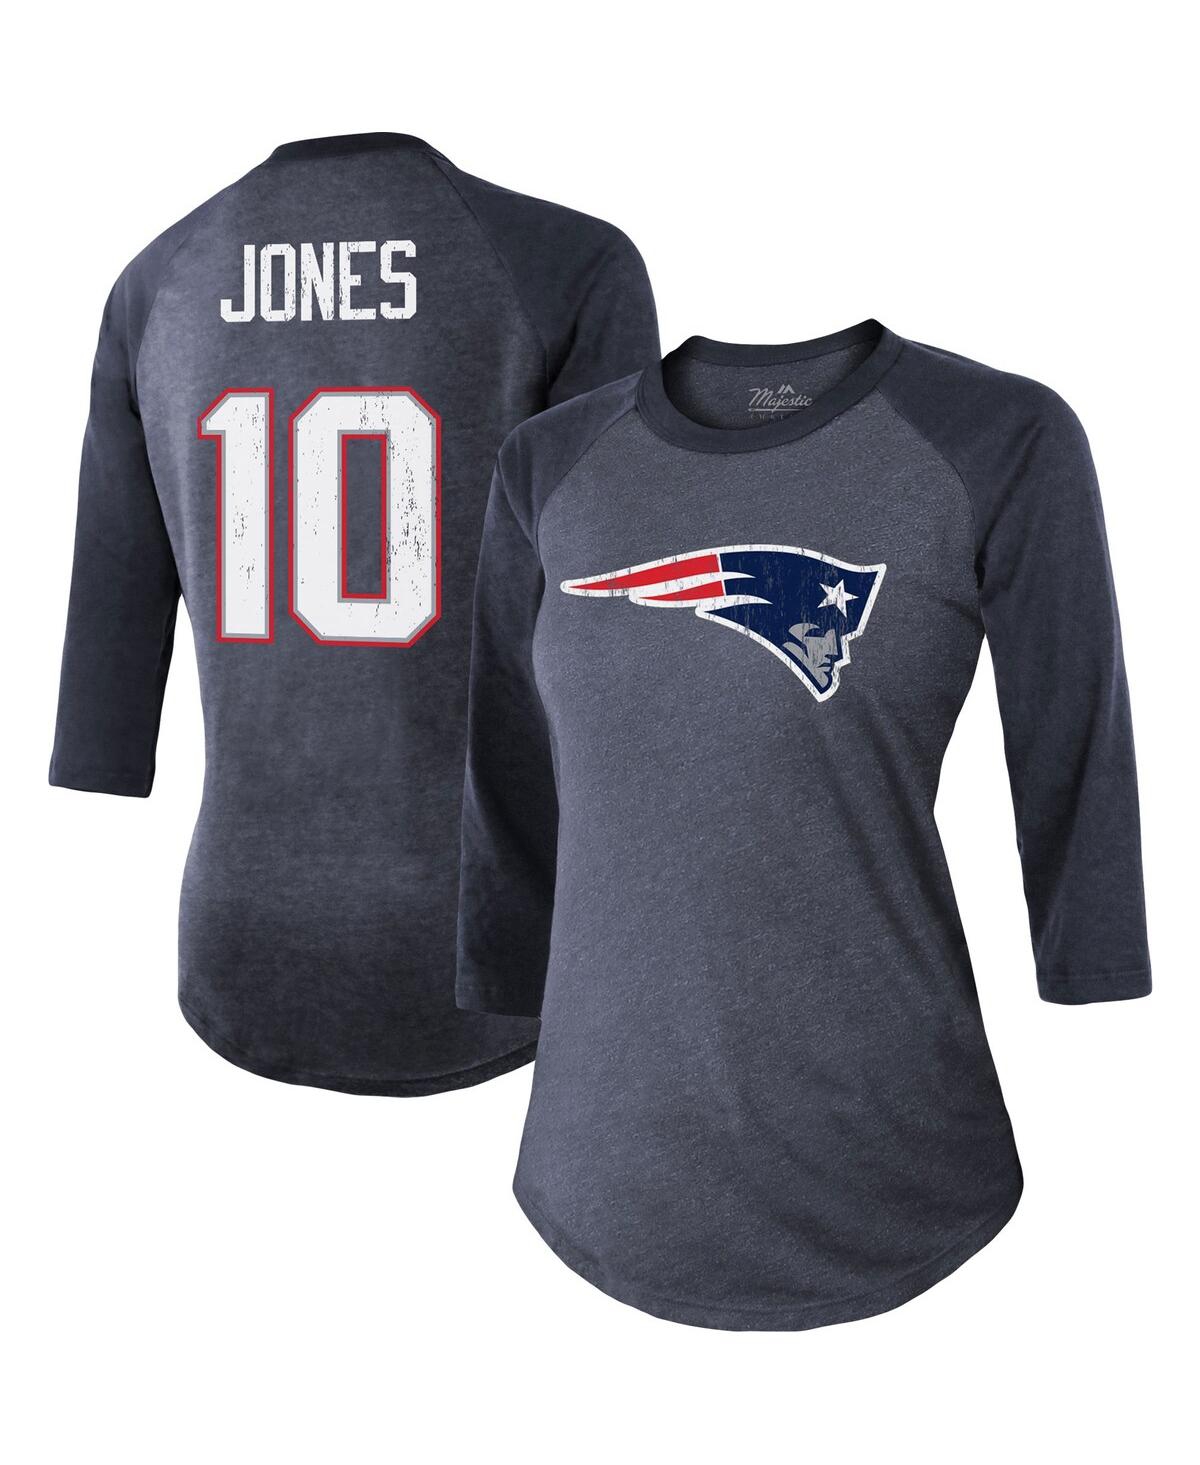 Women's Majestic Threads Mac Jones Navy New England Patriots Player Name and Number Raglan Tri-Blend 3/4-Sleeve T-shirt - Navy